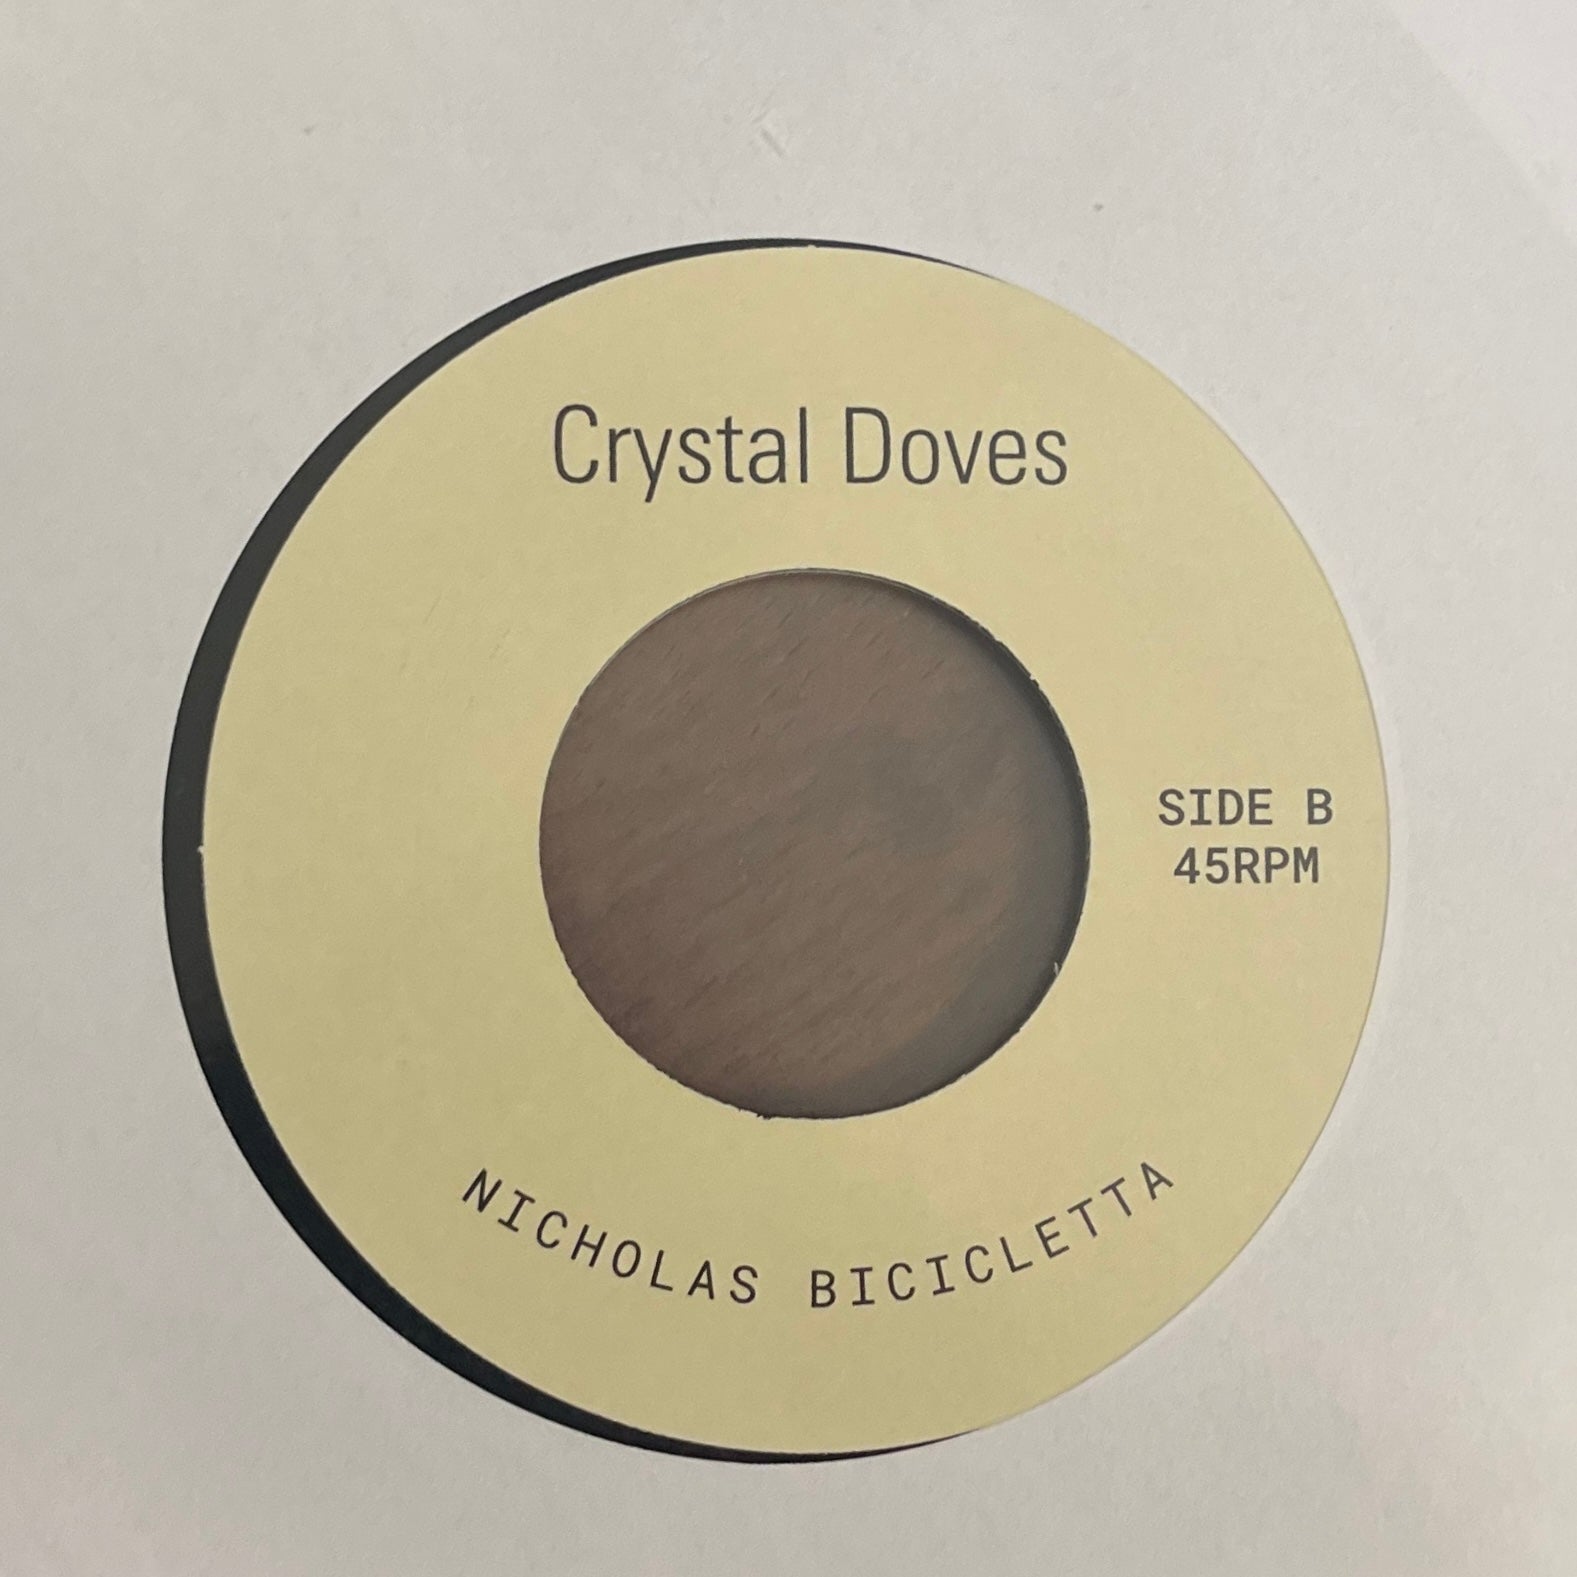 Nick Bike (Nicholas Bicicletta) - 808 Doves b/w Crystal Doves